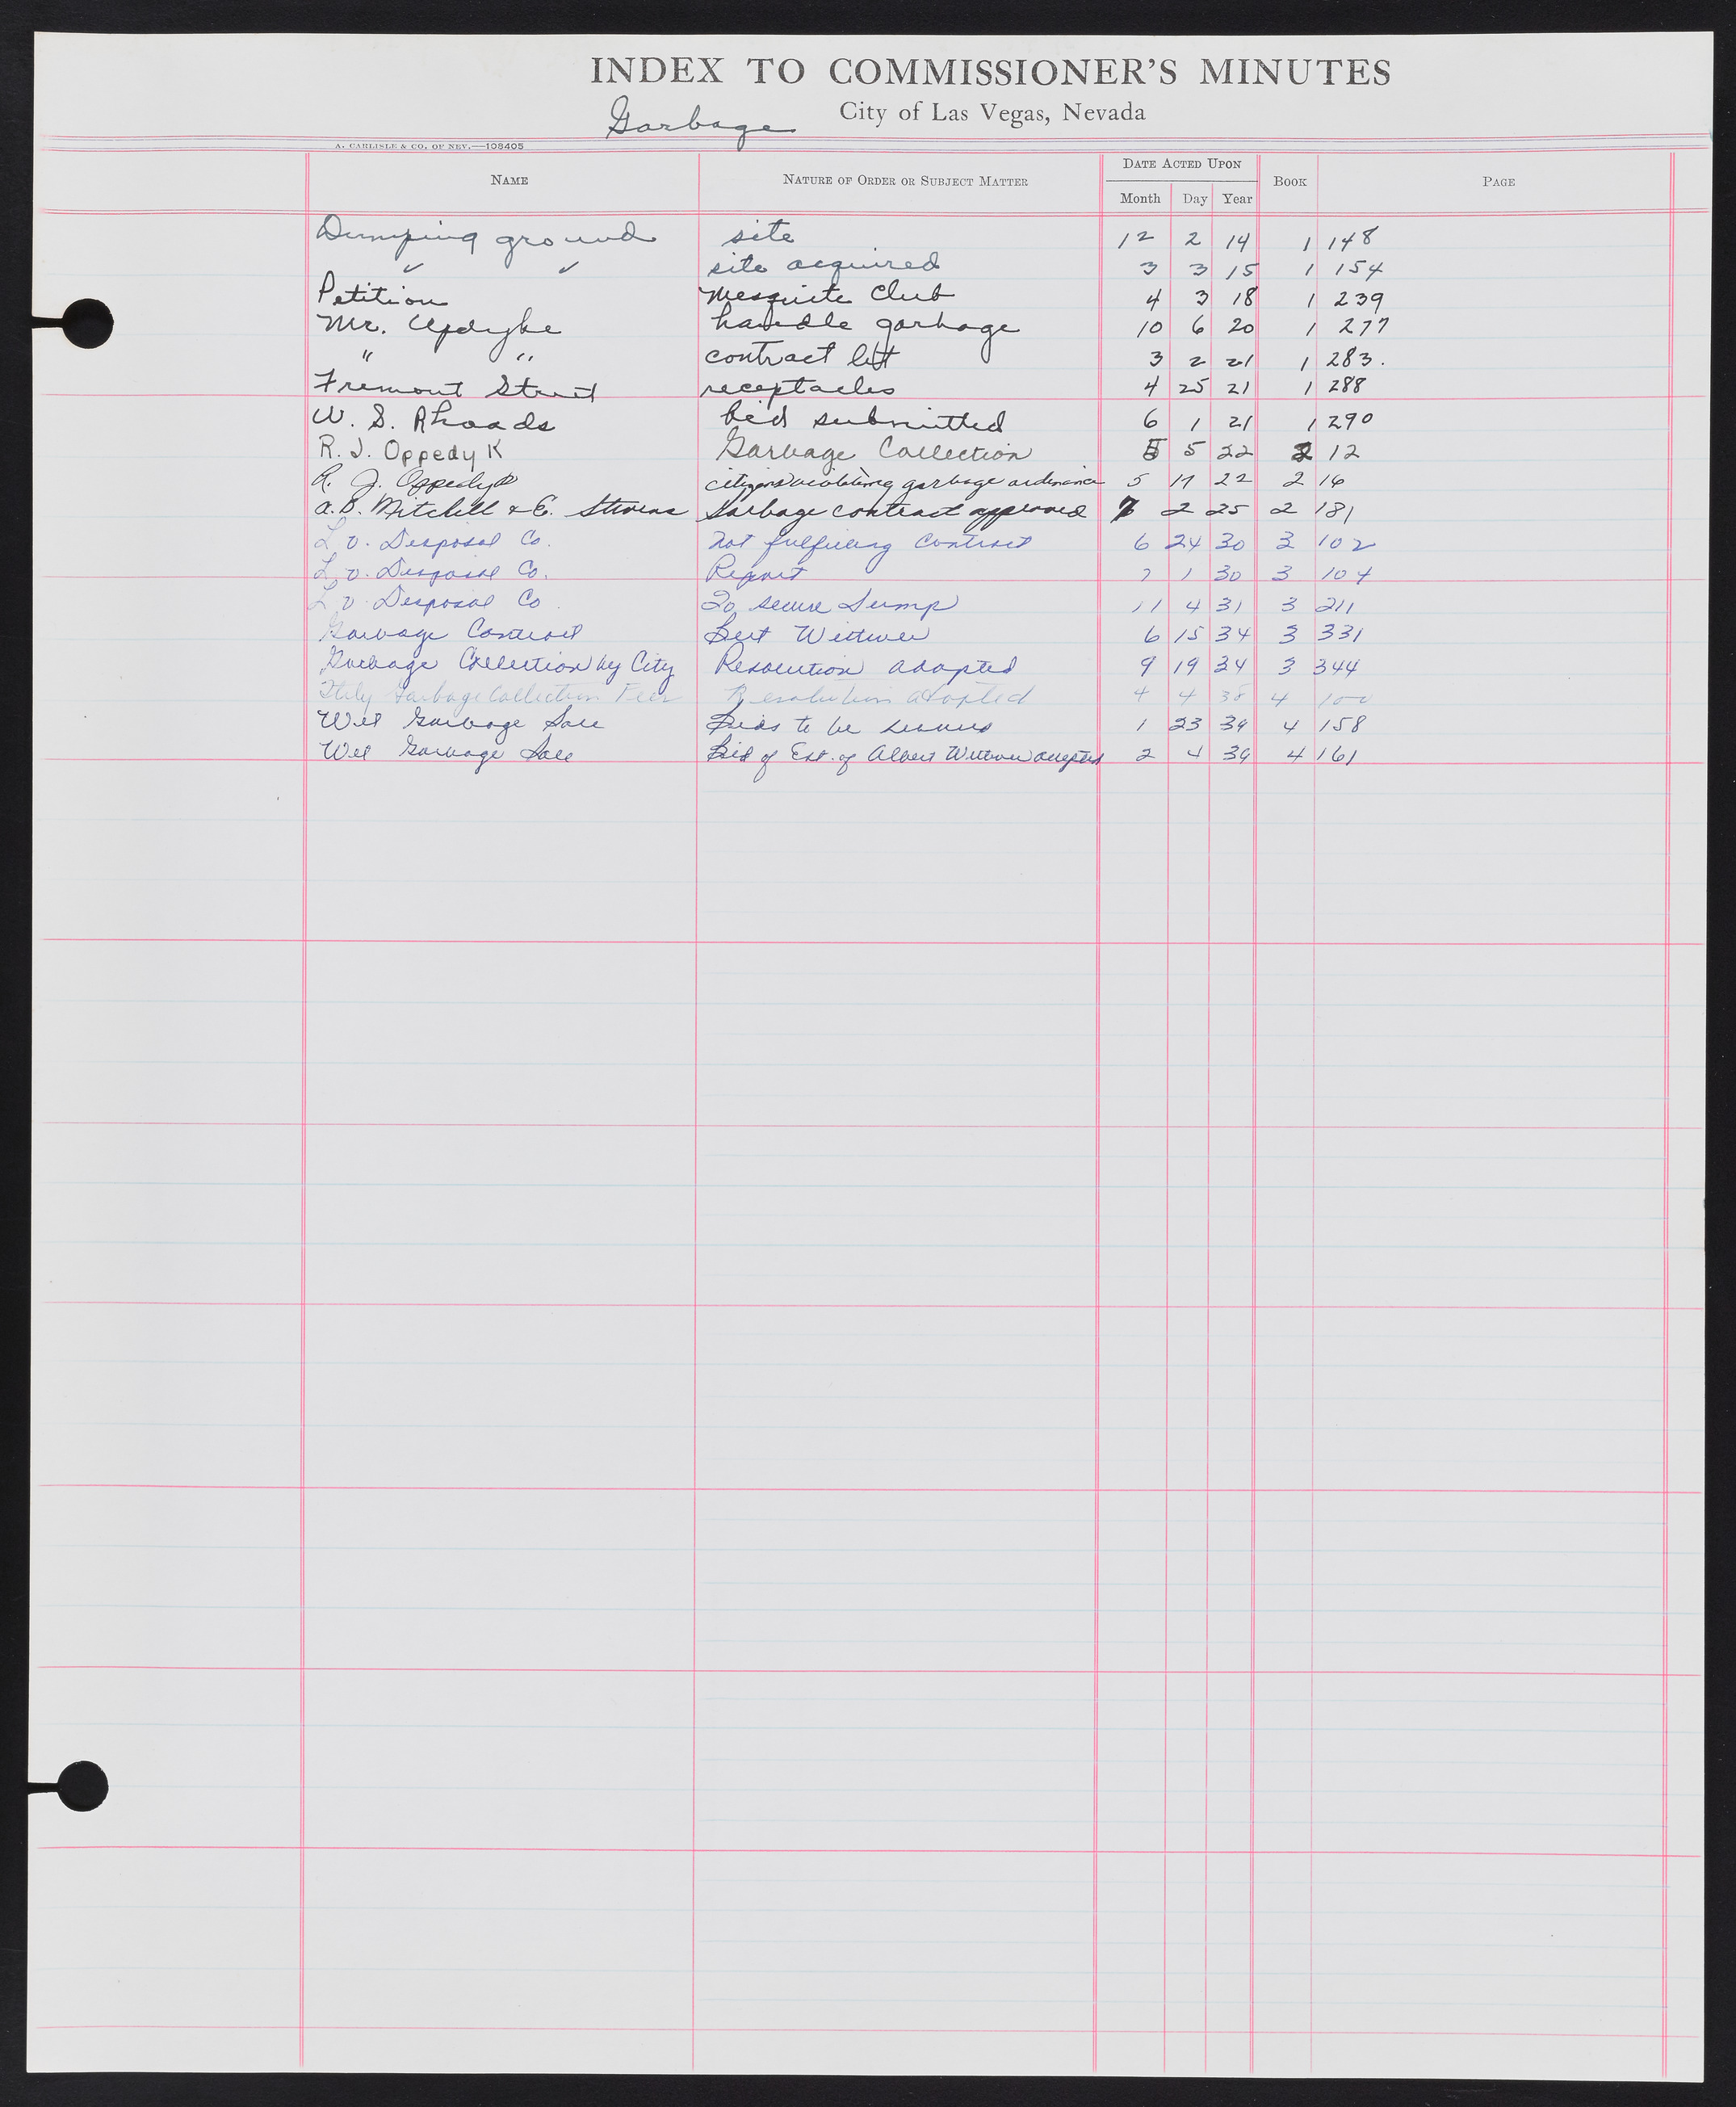 Las Vegas City Commission Minutes Index 1, 1911-1960: documents, item 147